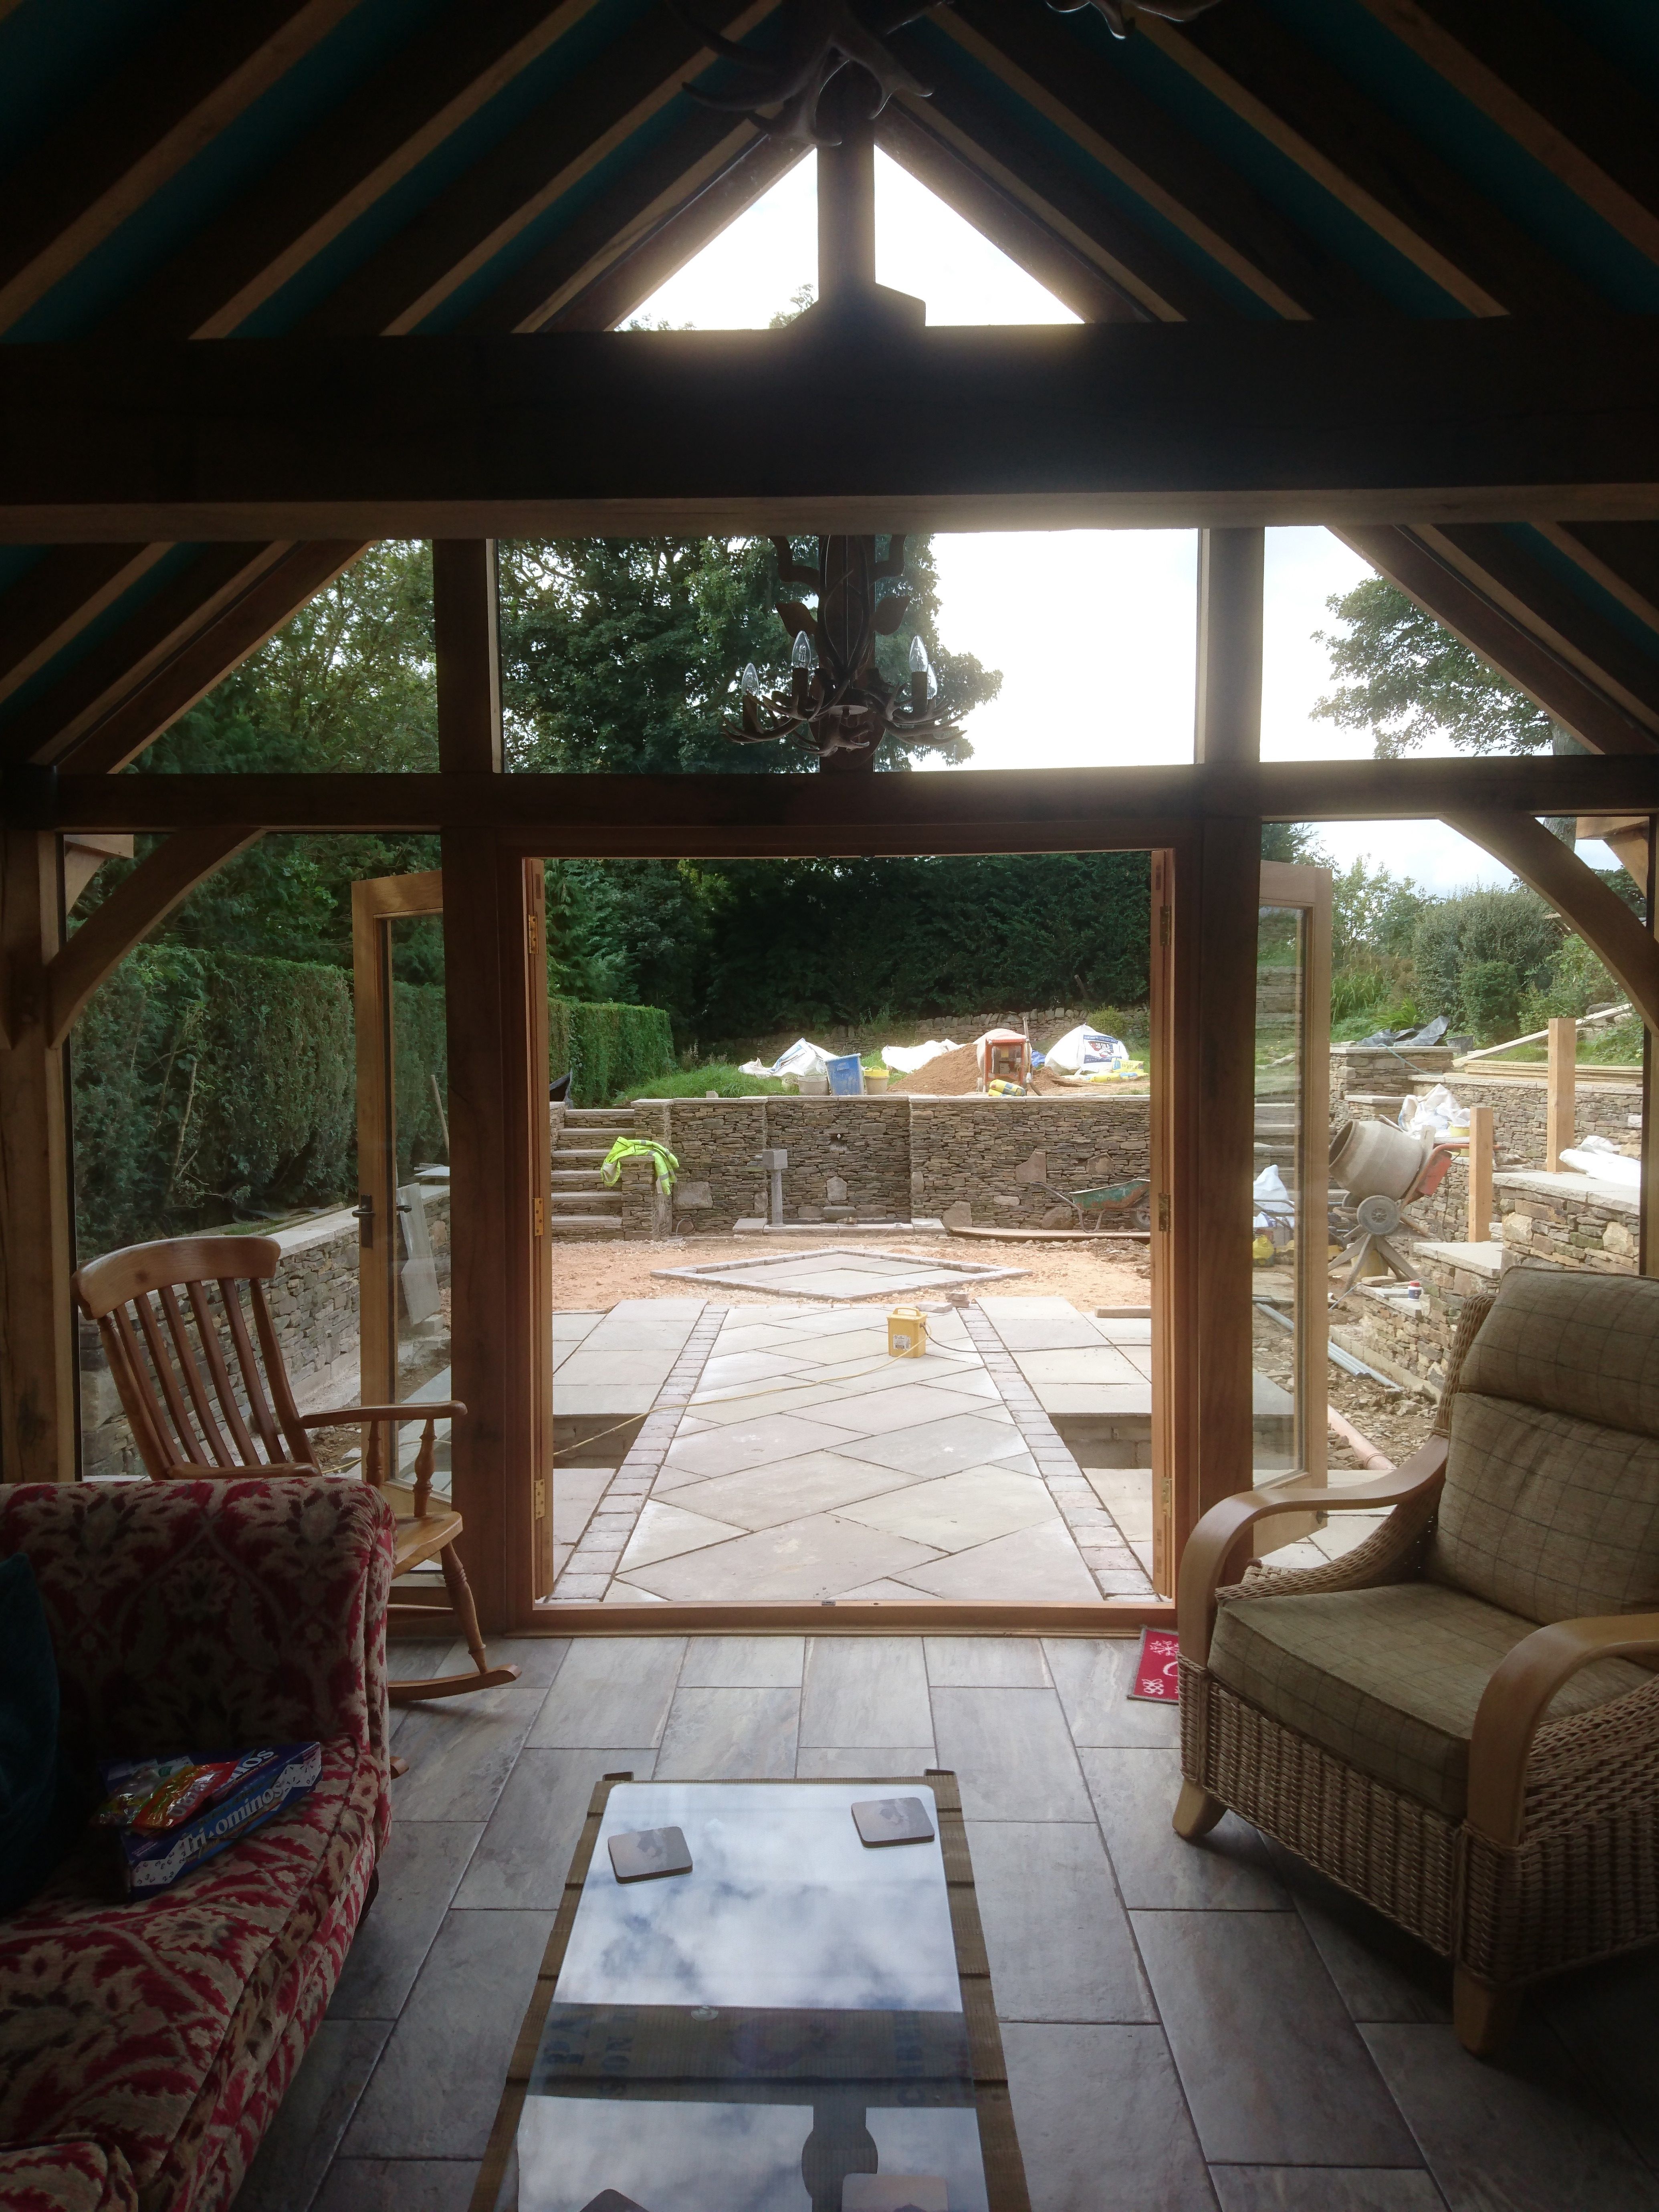 Listed building oak frame extension (internal - completed)